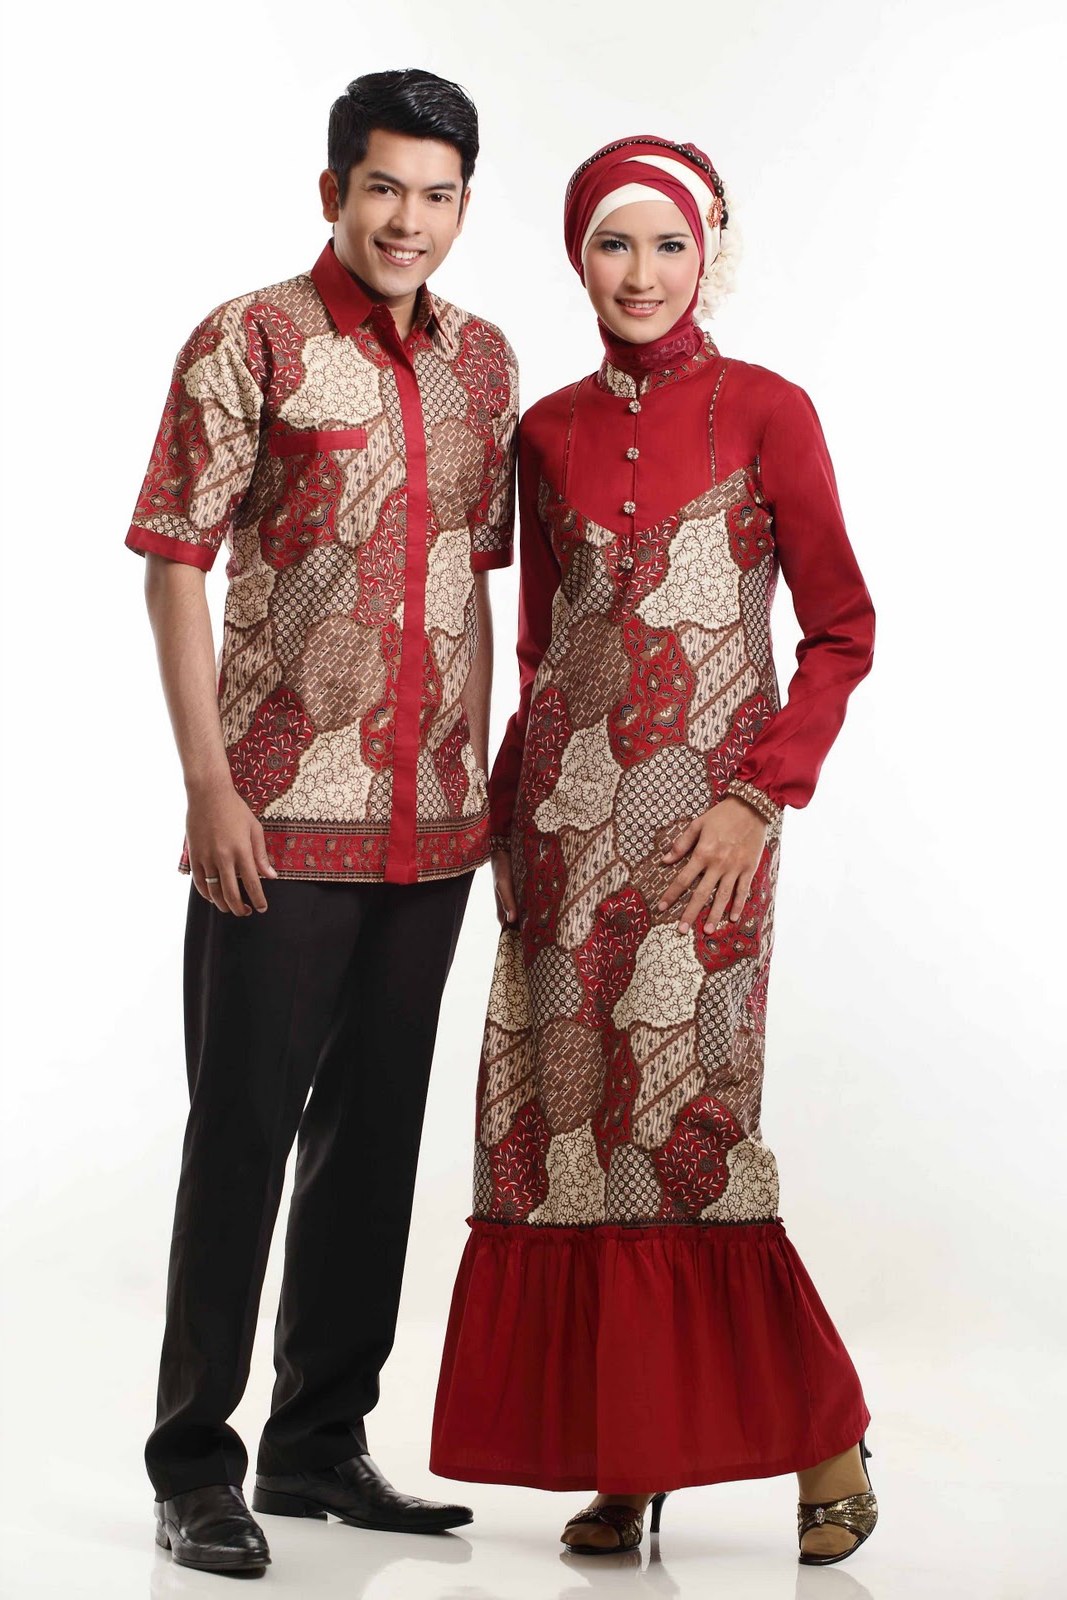 Bentuk Gambar Baju Lebaran Terbaru Etdg Bintang anda Trend Model Baju Batik Lebaran Terbaru 2013